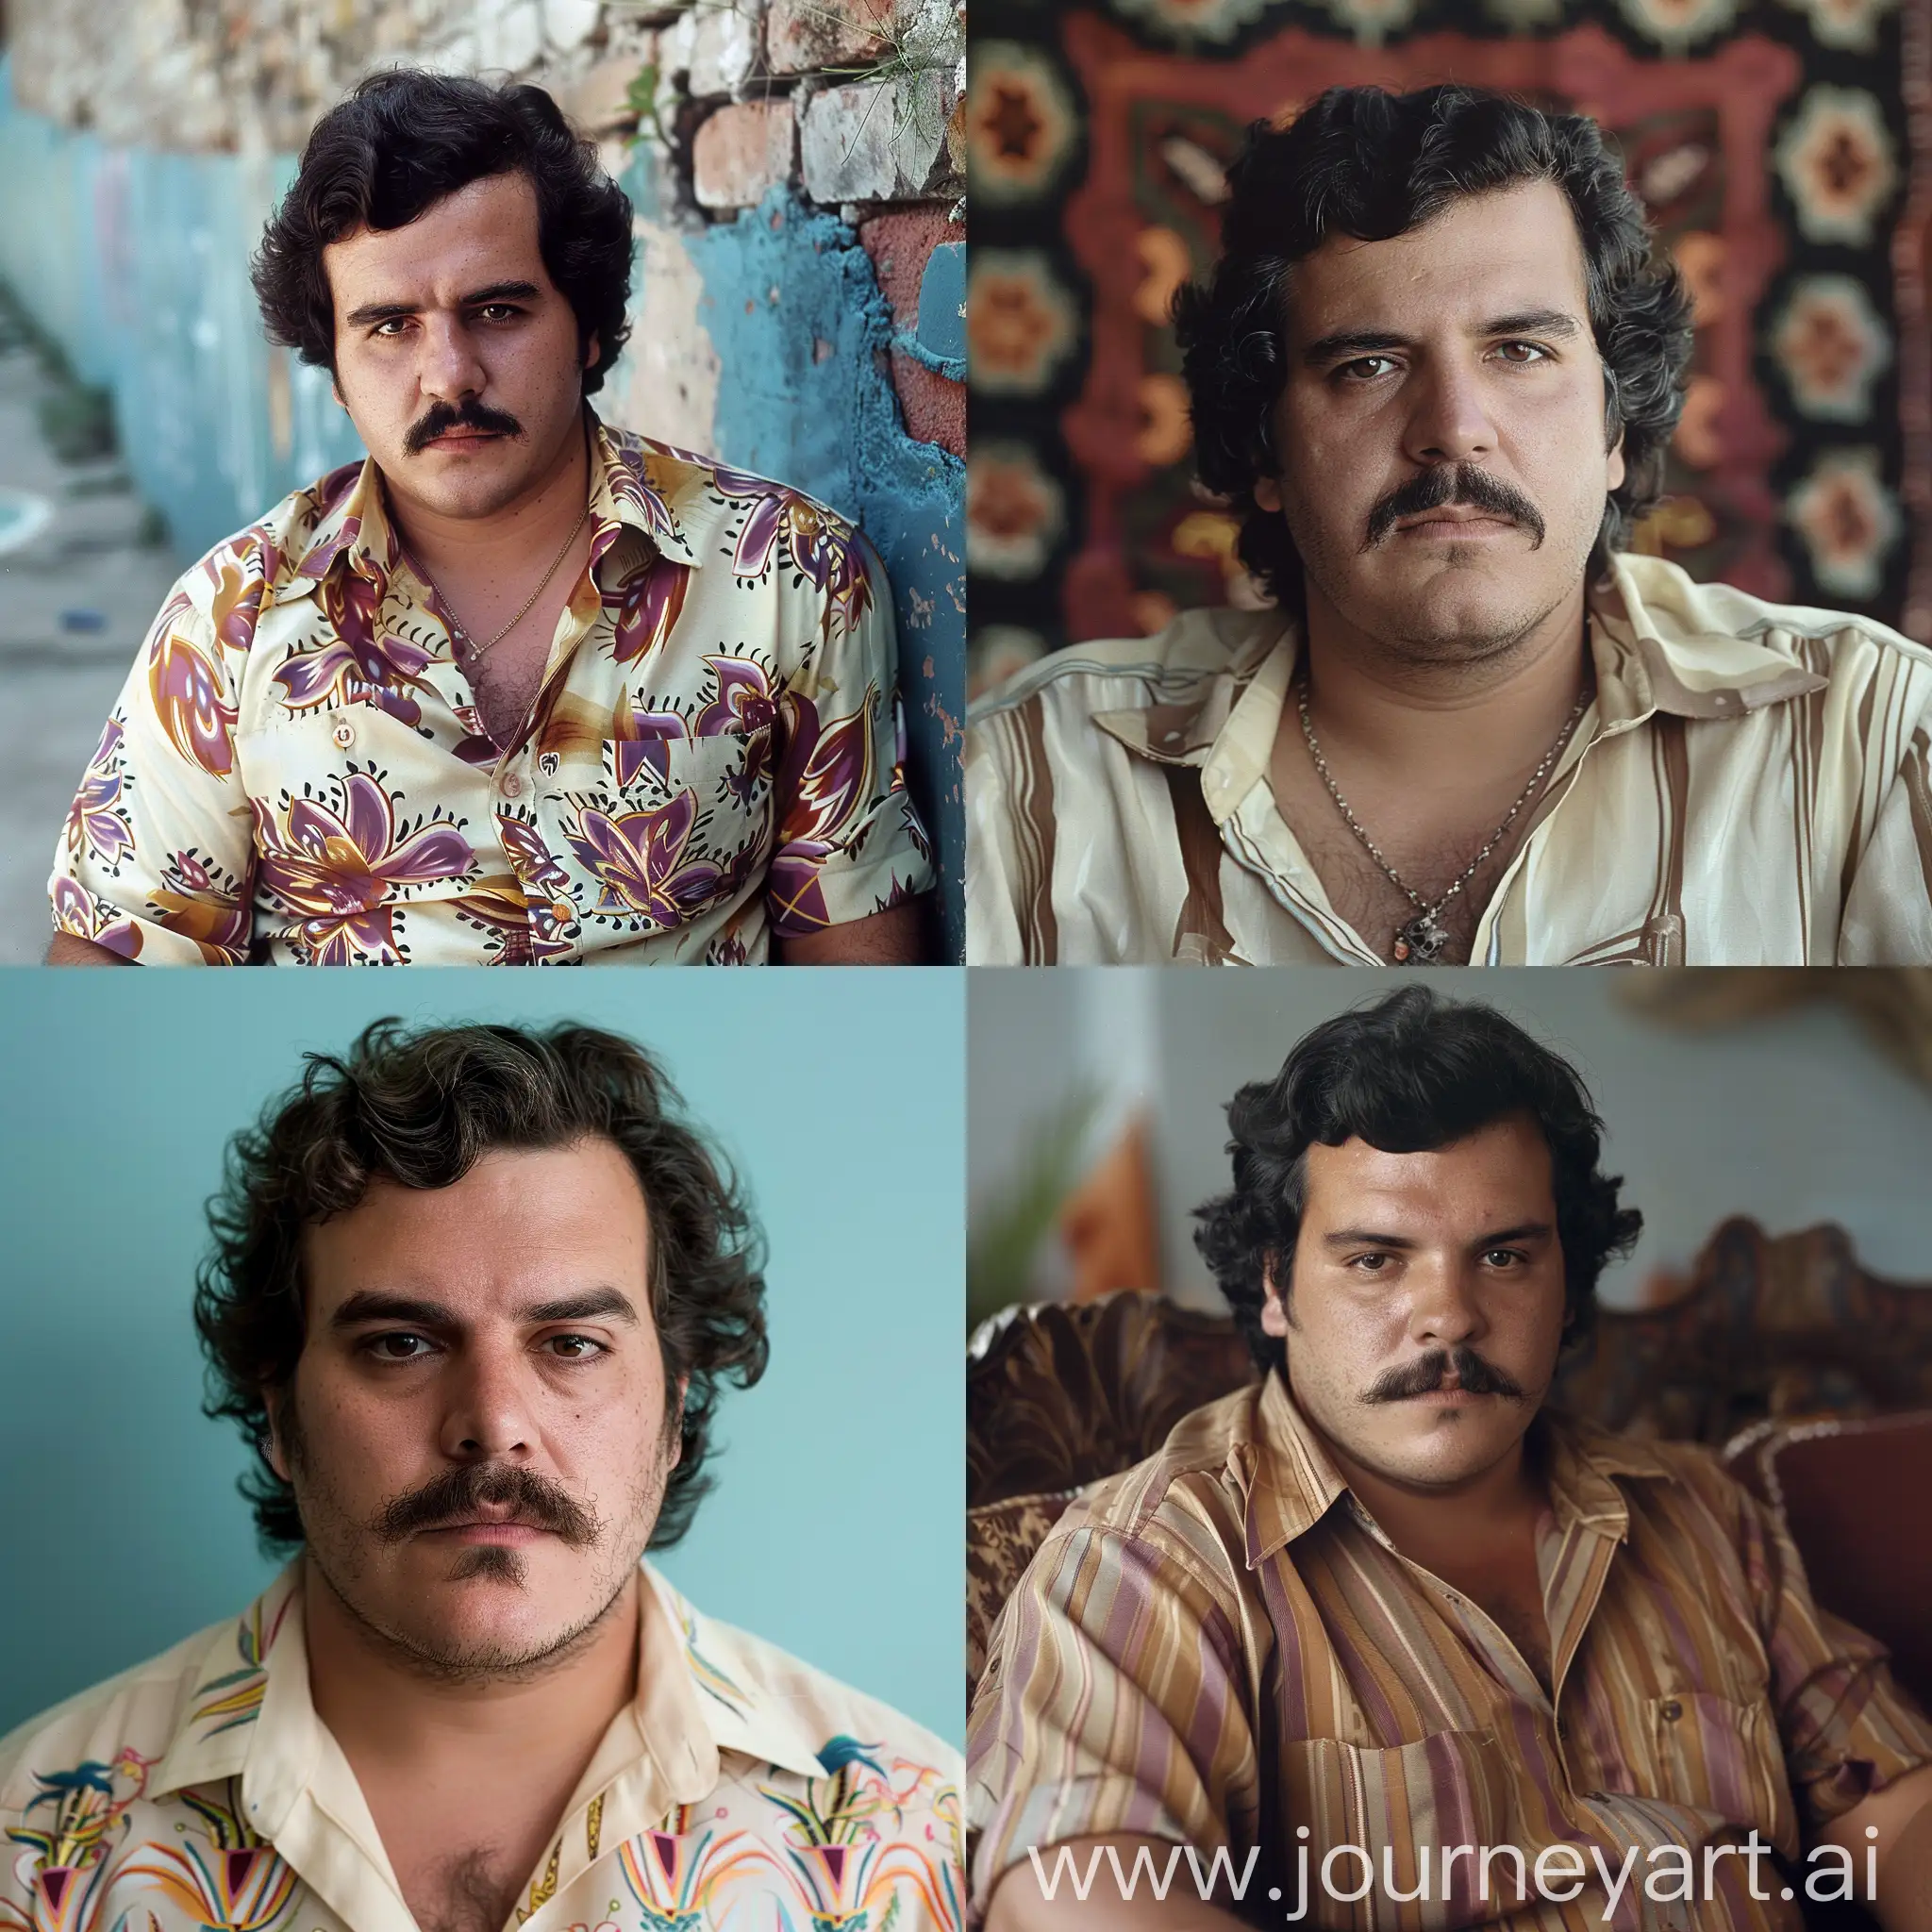 Pablo-Escobar-Portrait-with-Intense-Expression-in-11-Aspect-Ratio